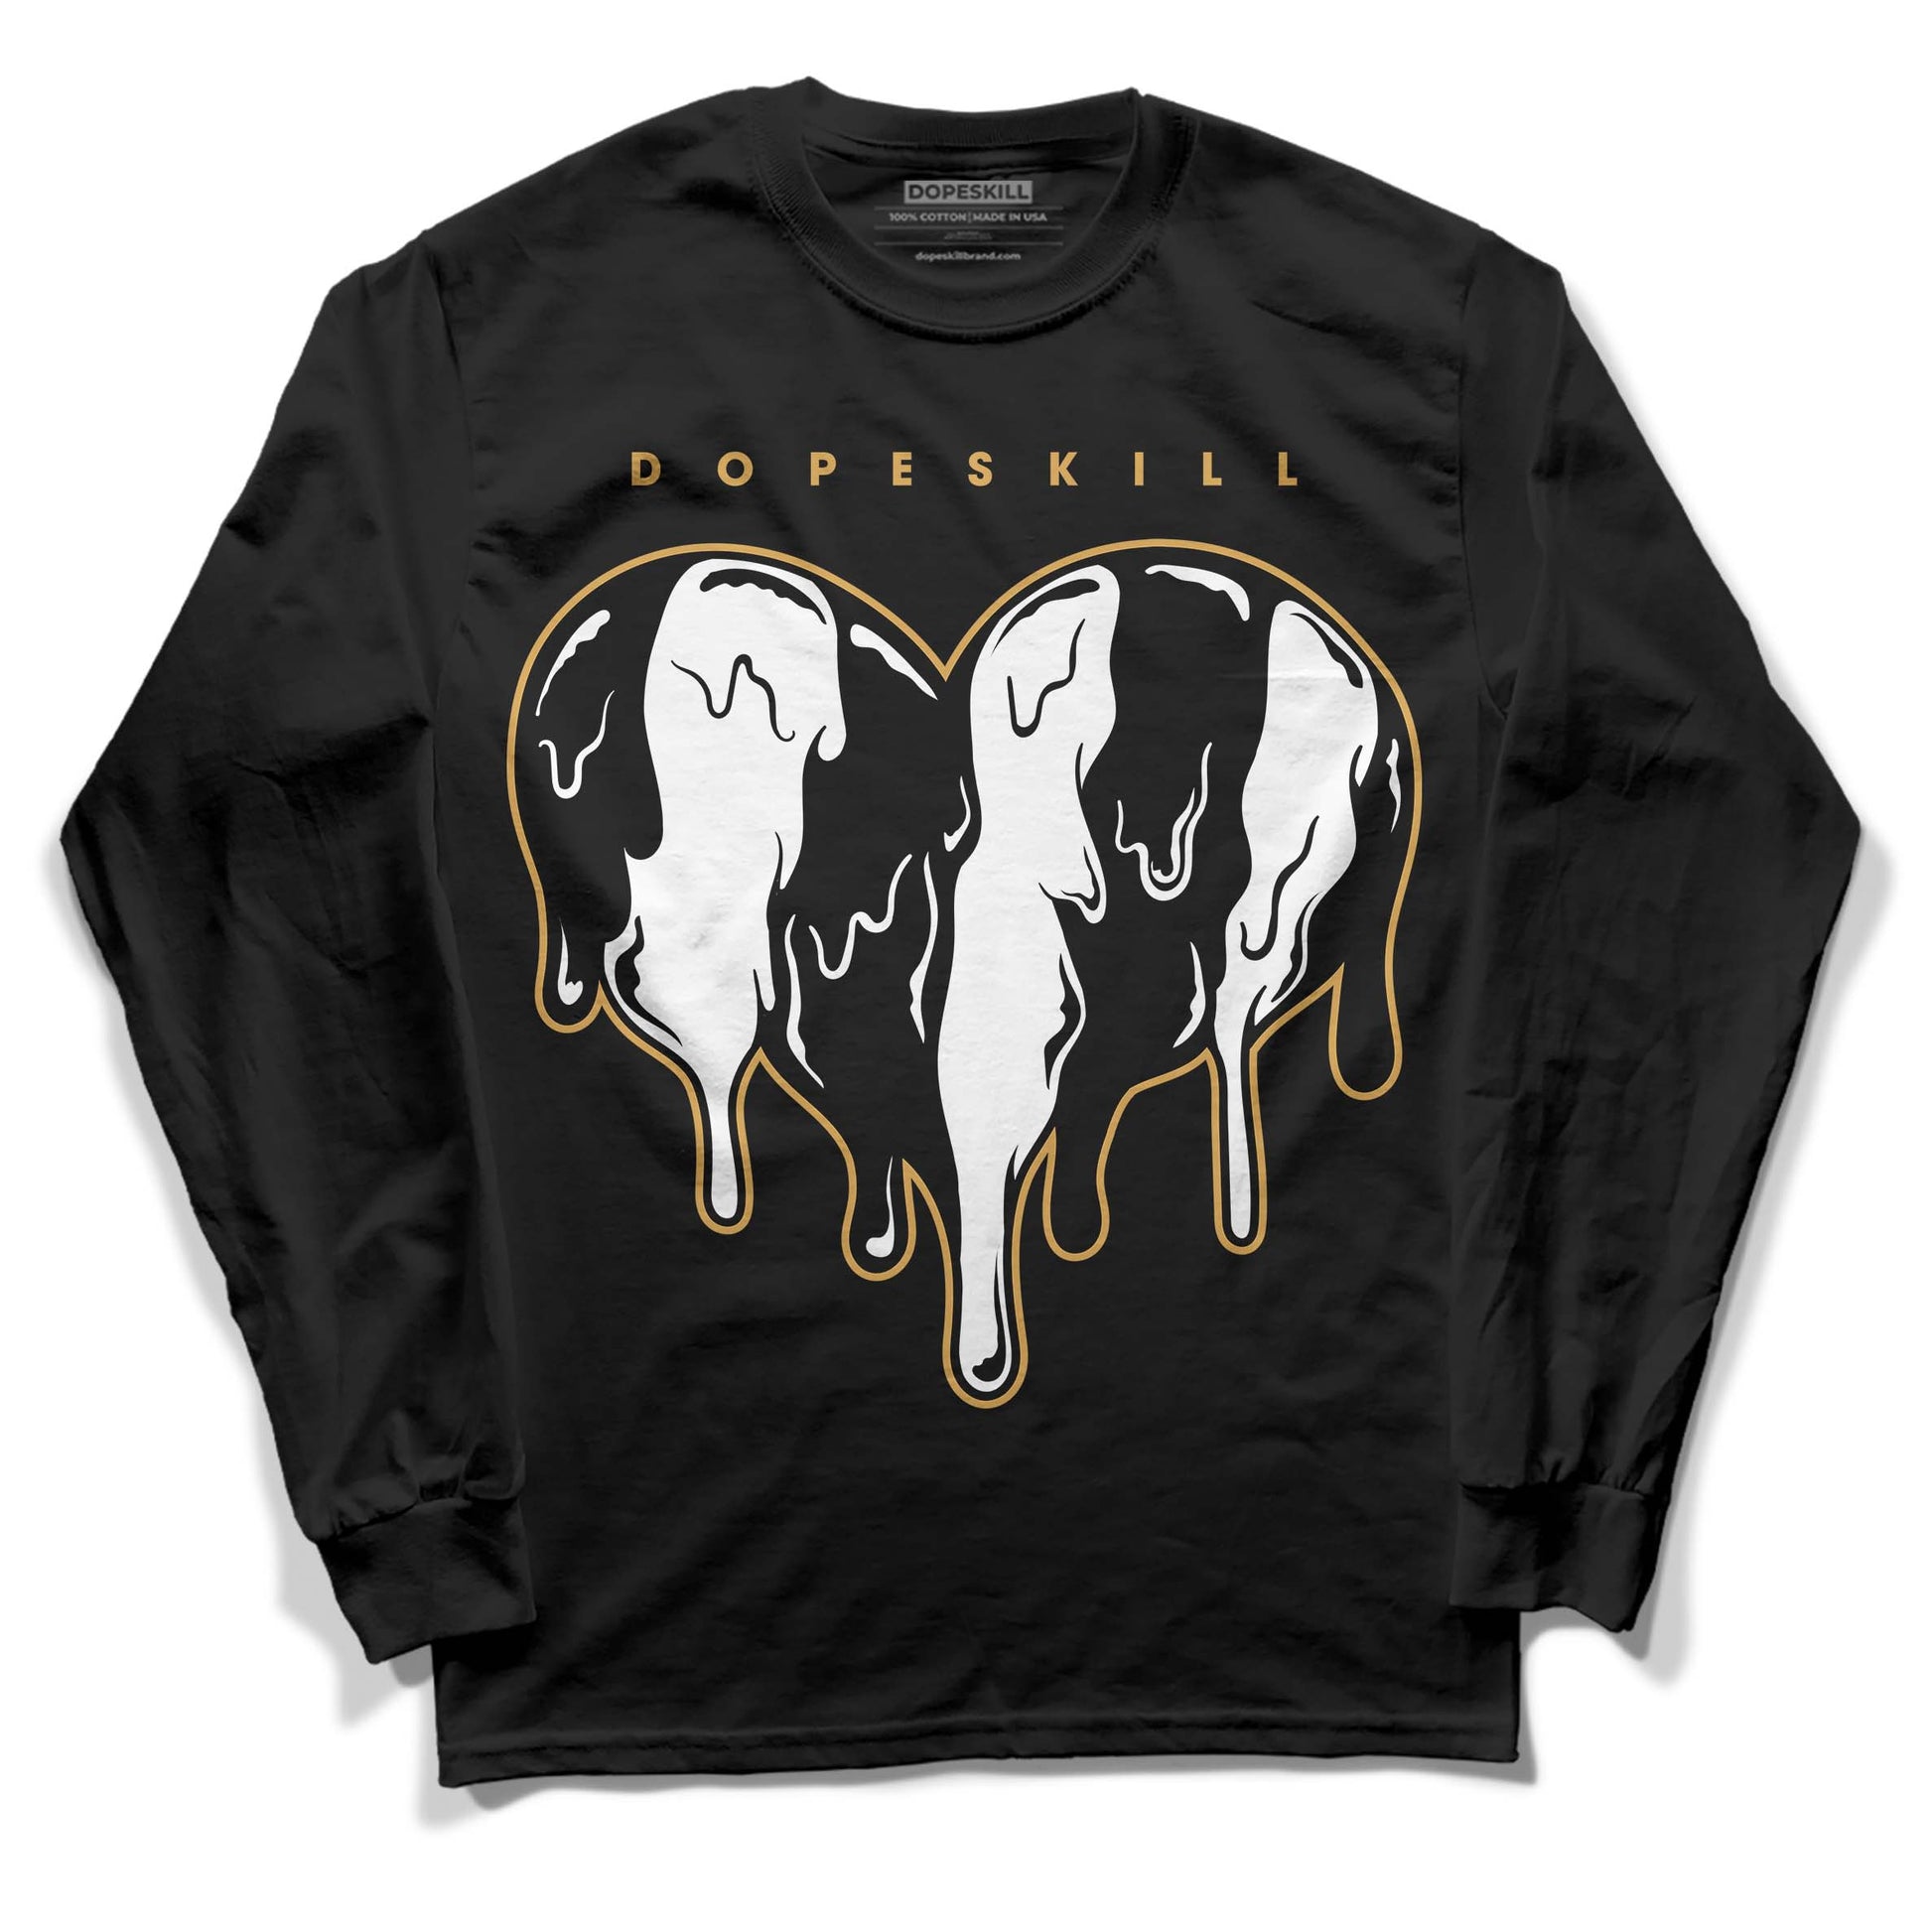 Jordan 11 "Gratitude" DopeSkill Long Sleeve T-Shirt Slime Drip Heart Graphic Streetwear - Black